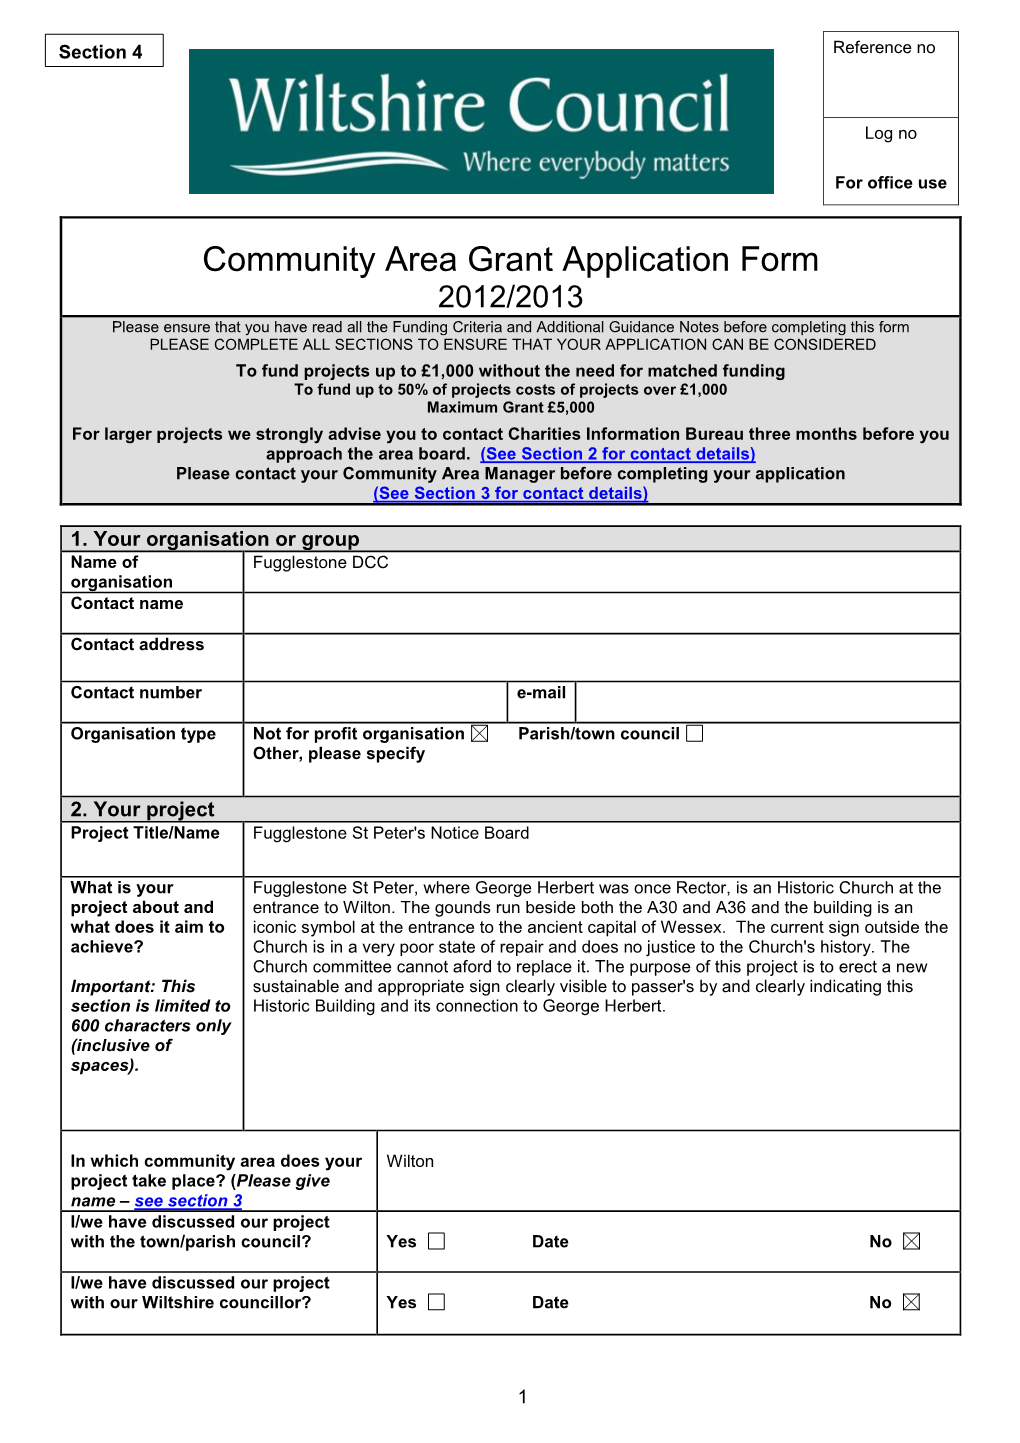 Community Area Grant Application Form